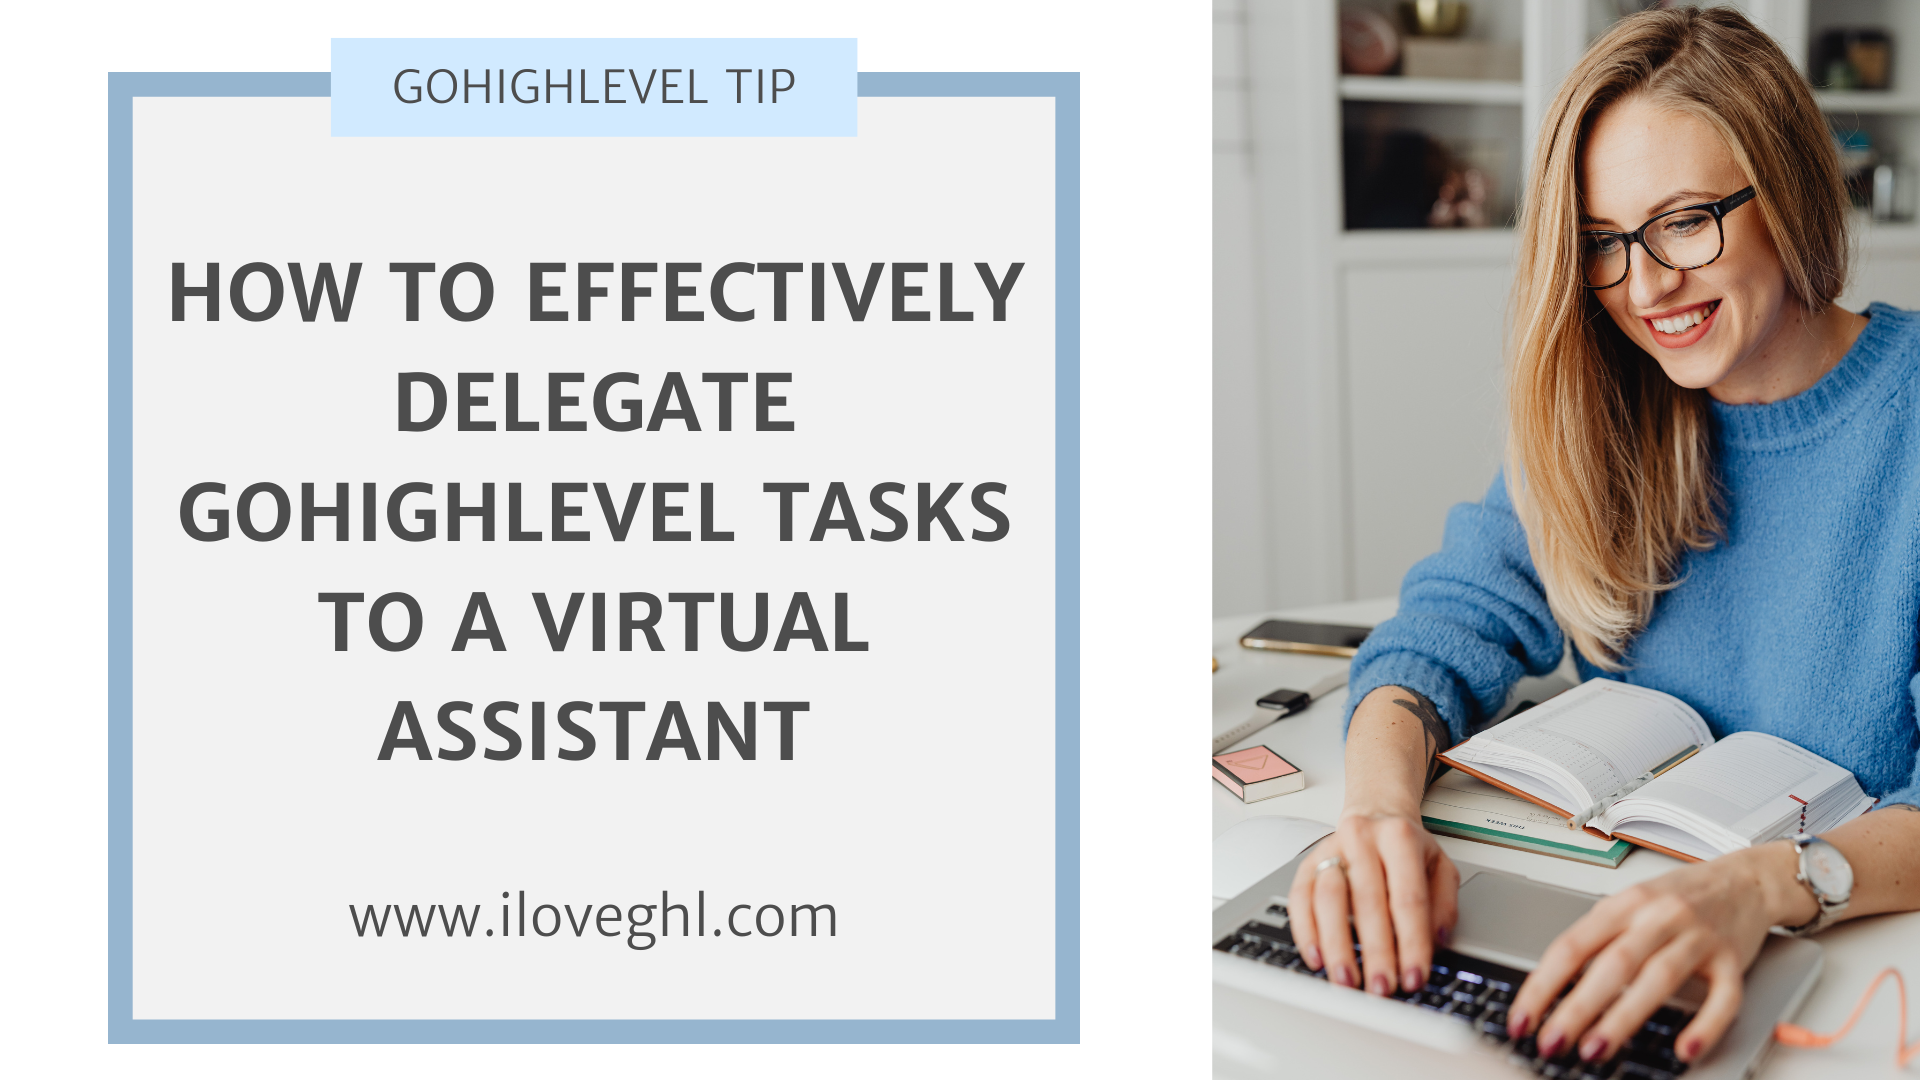 Delegate gohighlevel tasks to VA